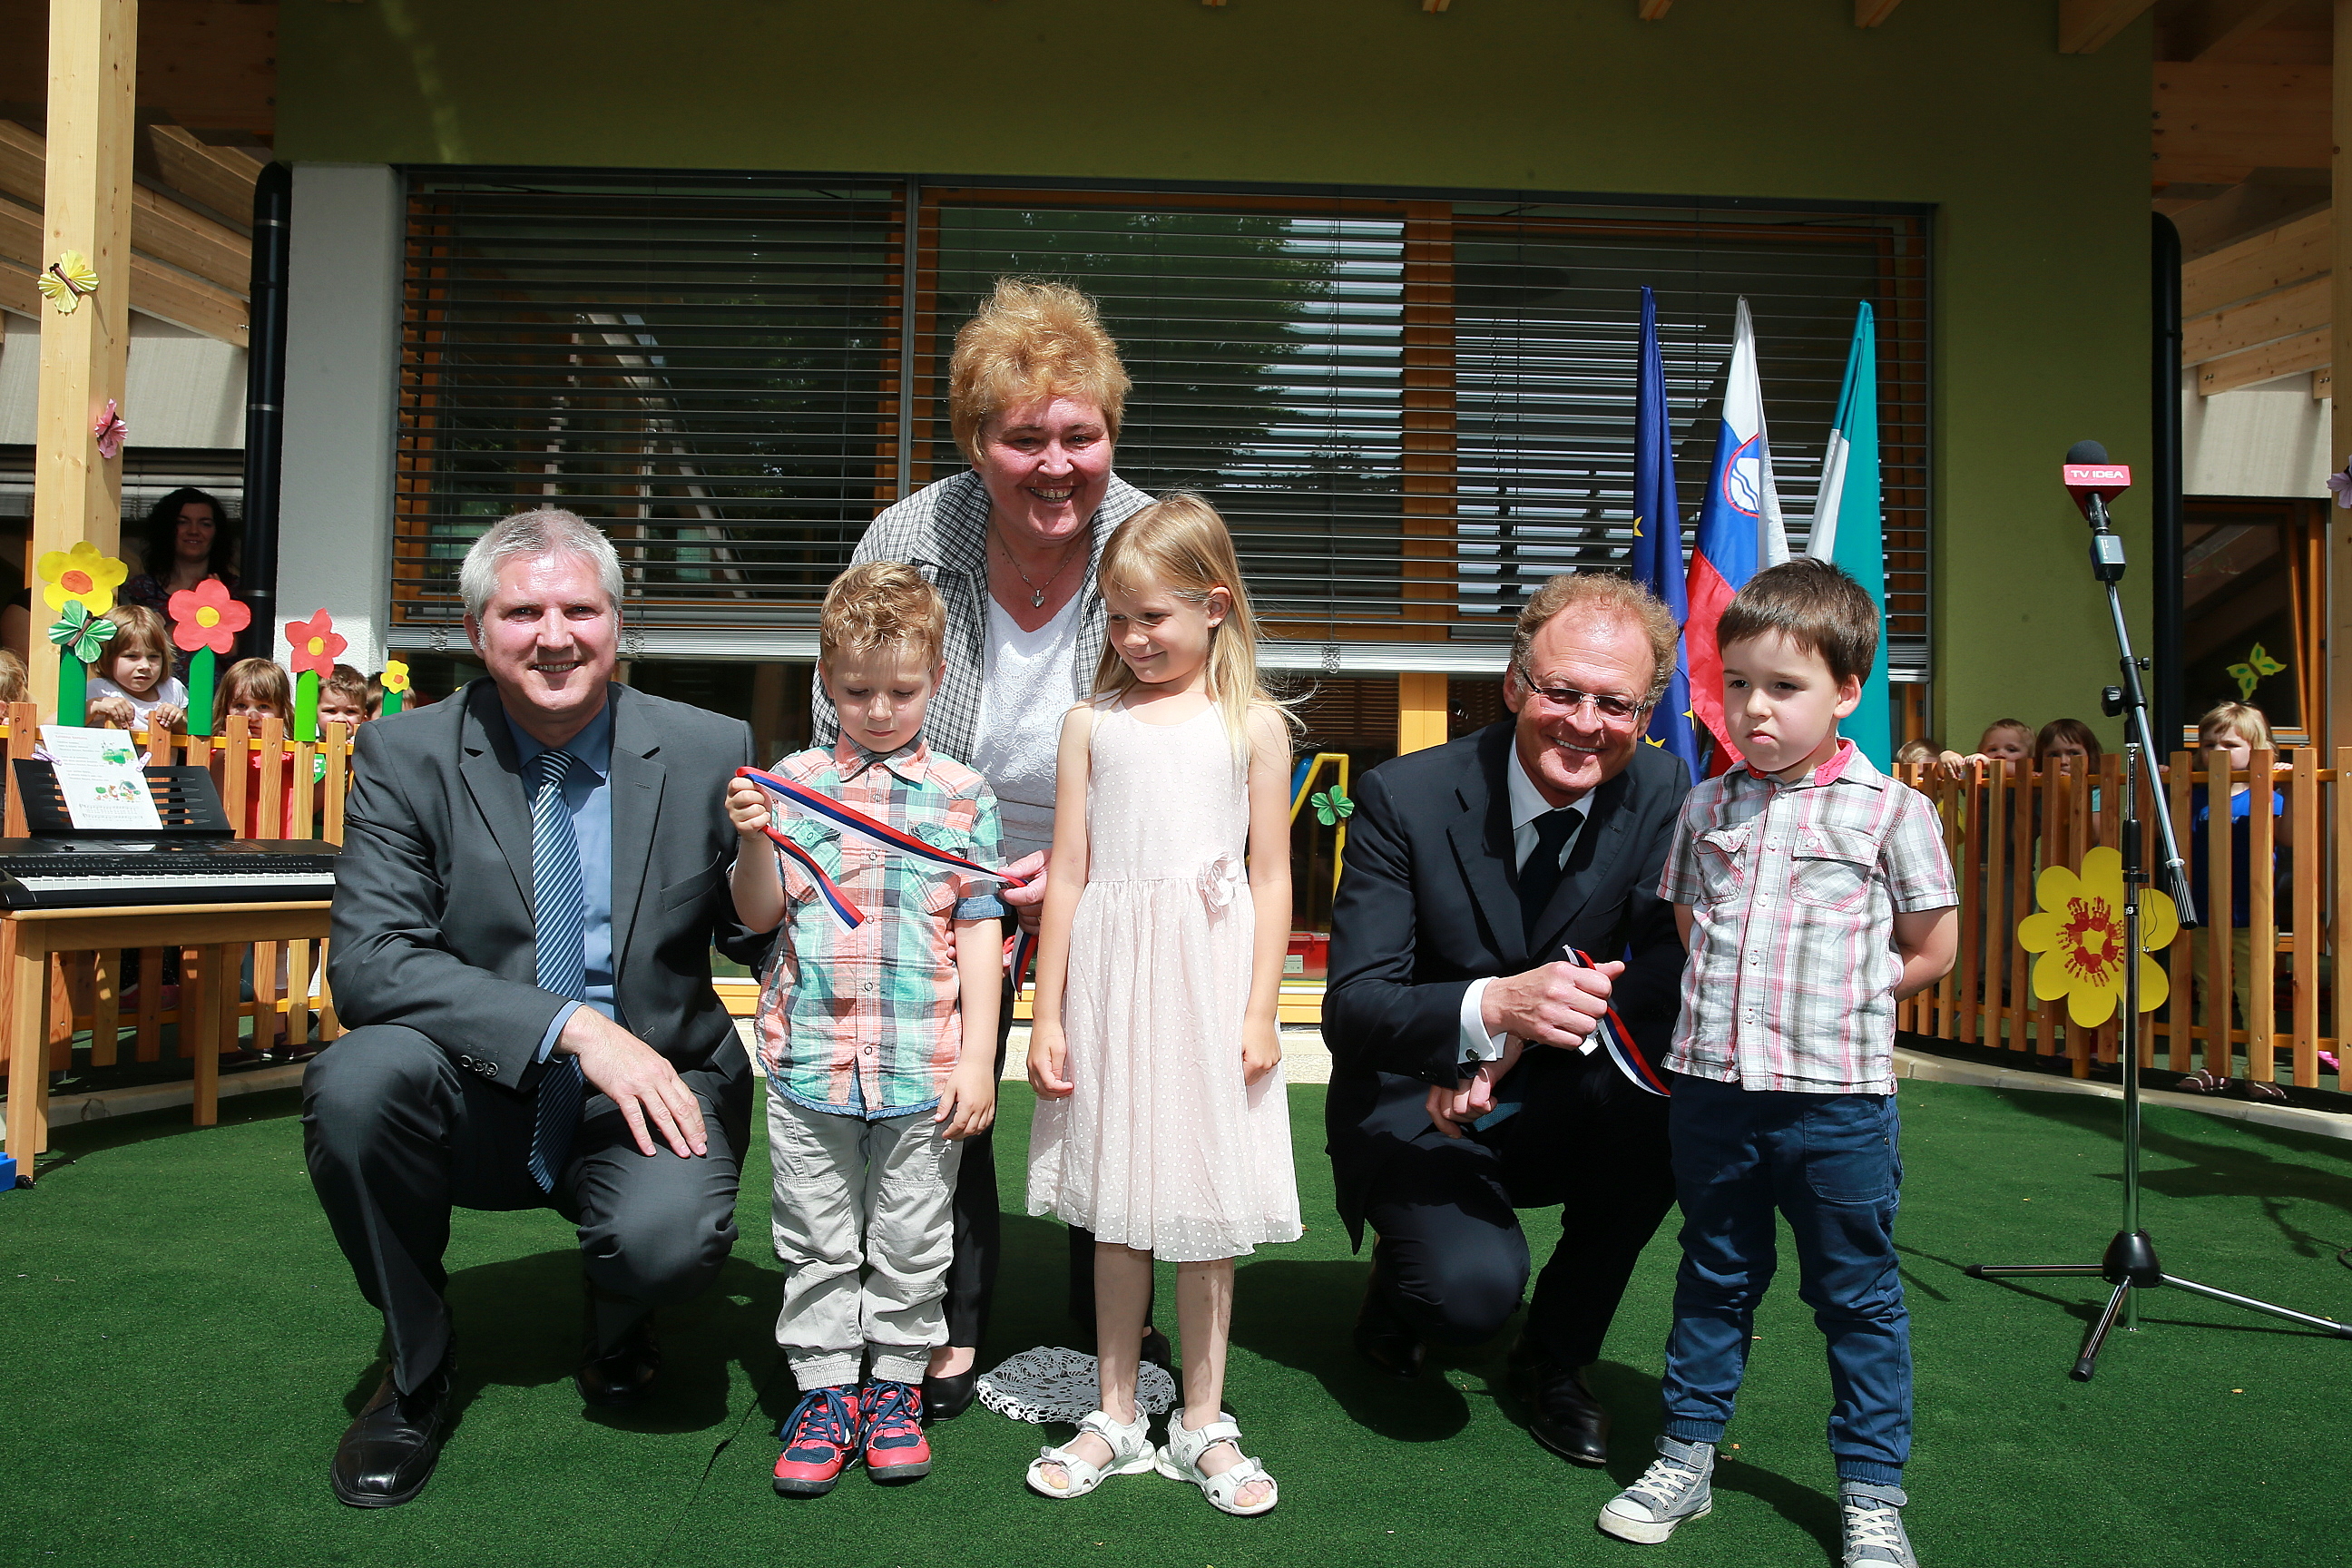 On May 23rd we inaugurated a new kindergarten in Murska Sobota, Slovenia